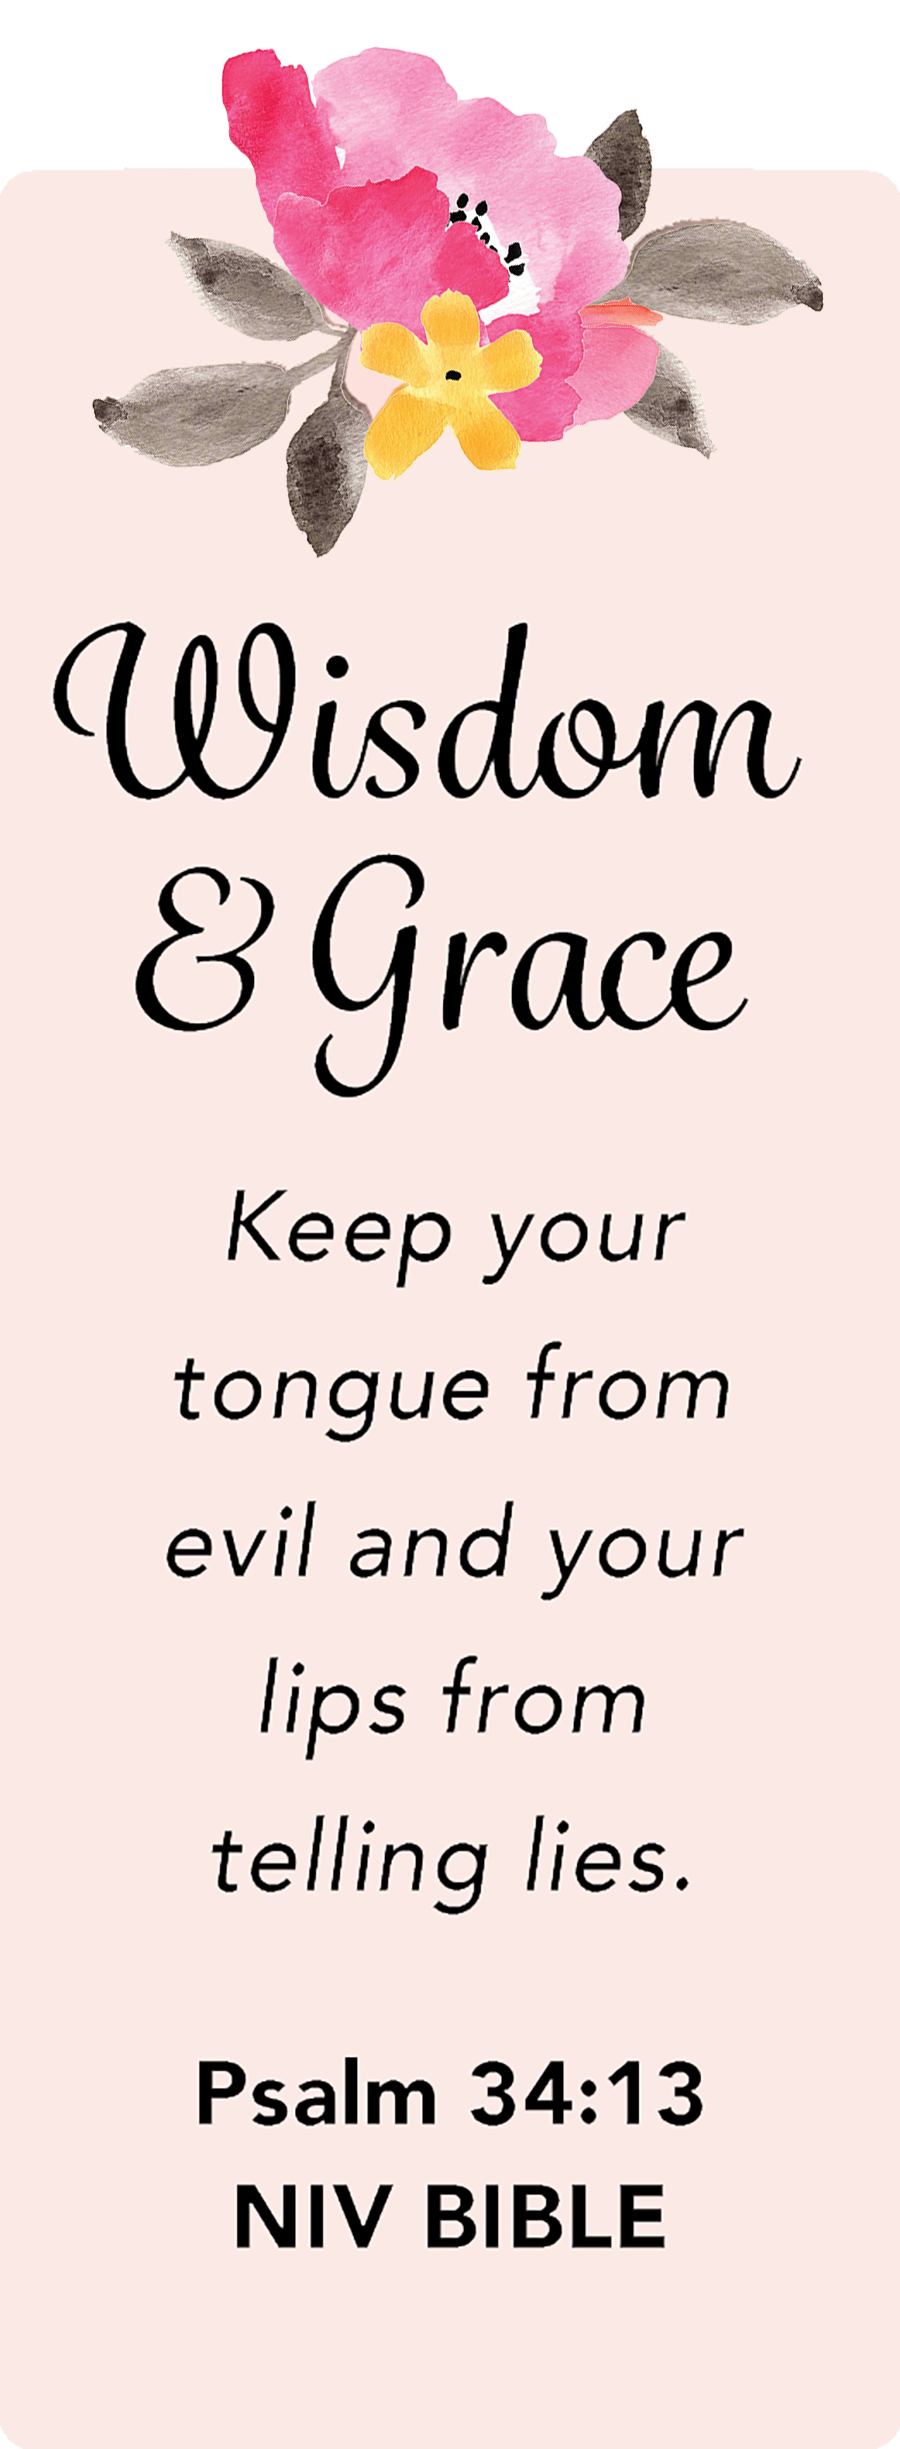 Wisdom and grace verse psalm 34:13